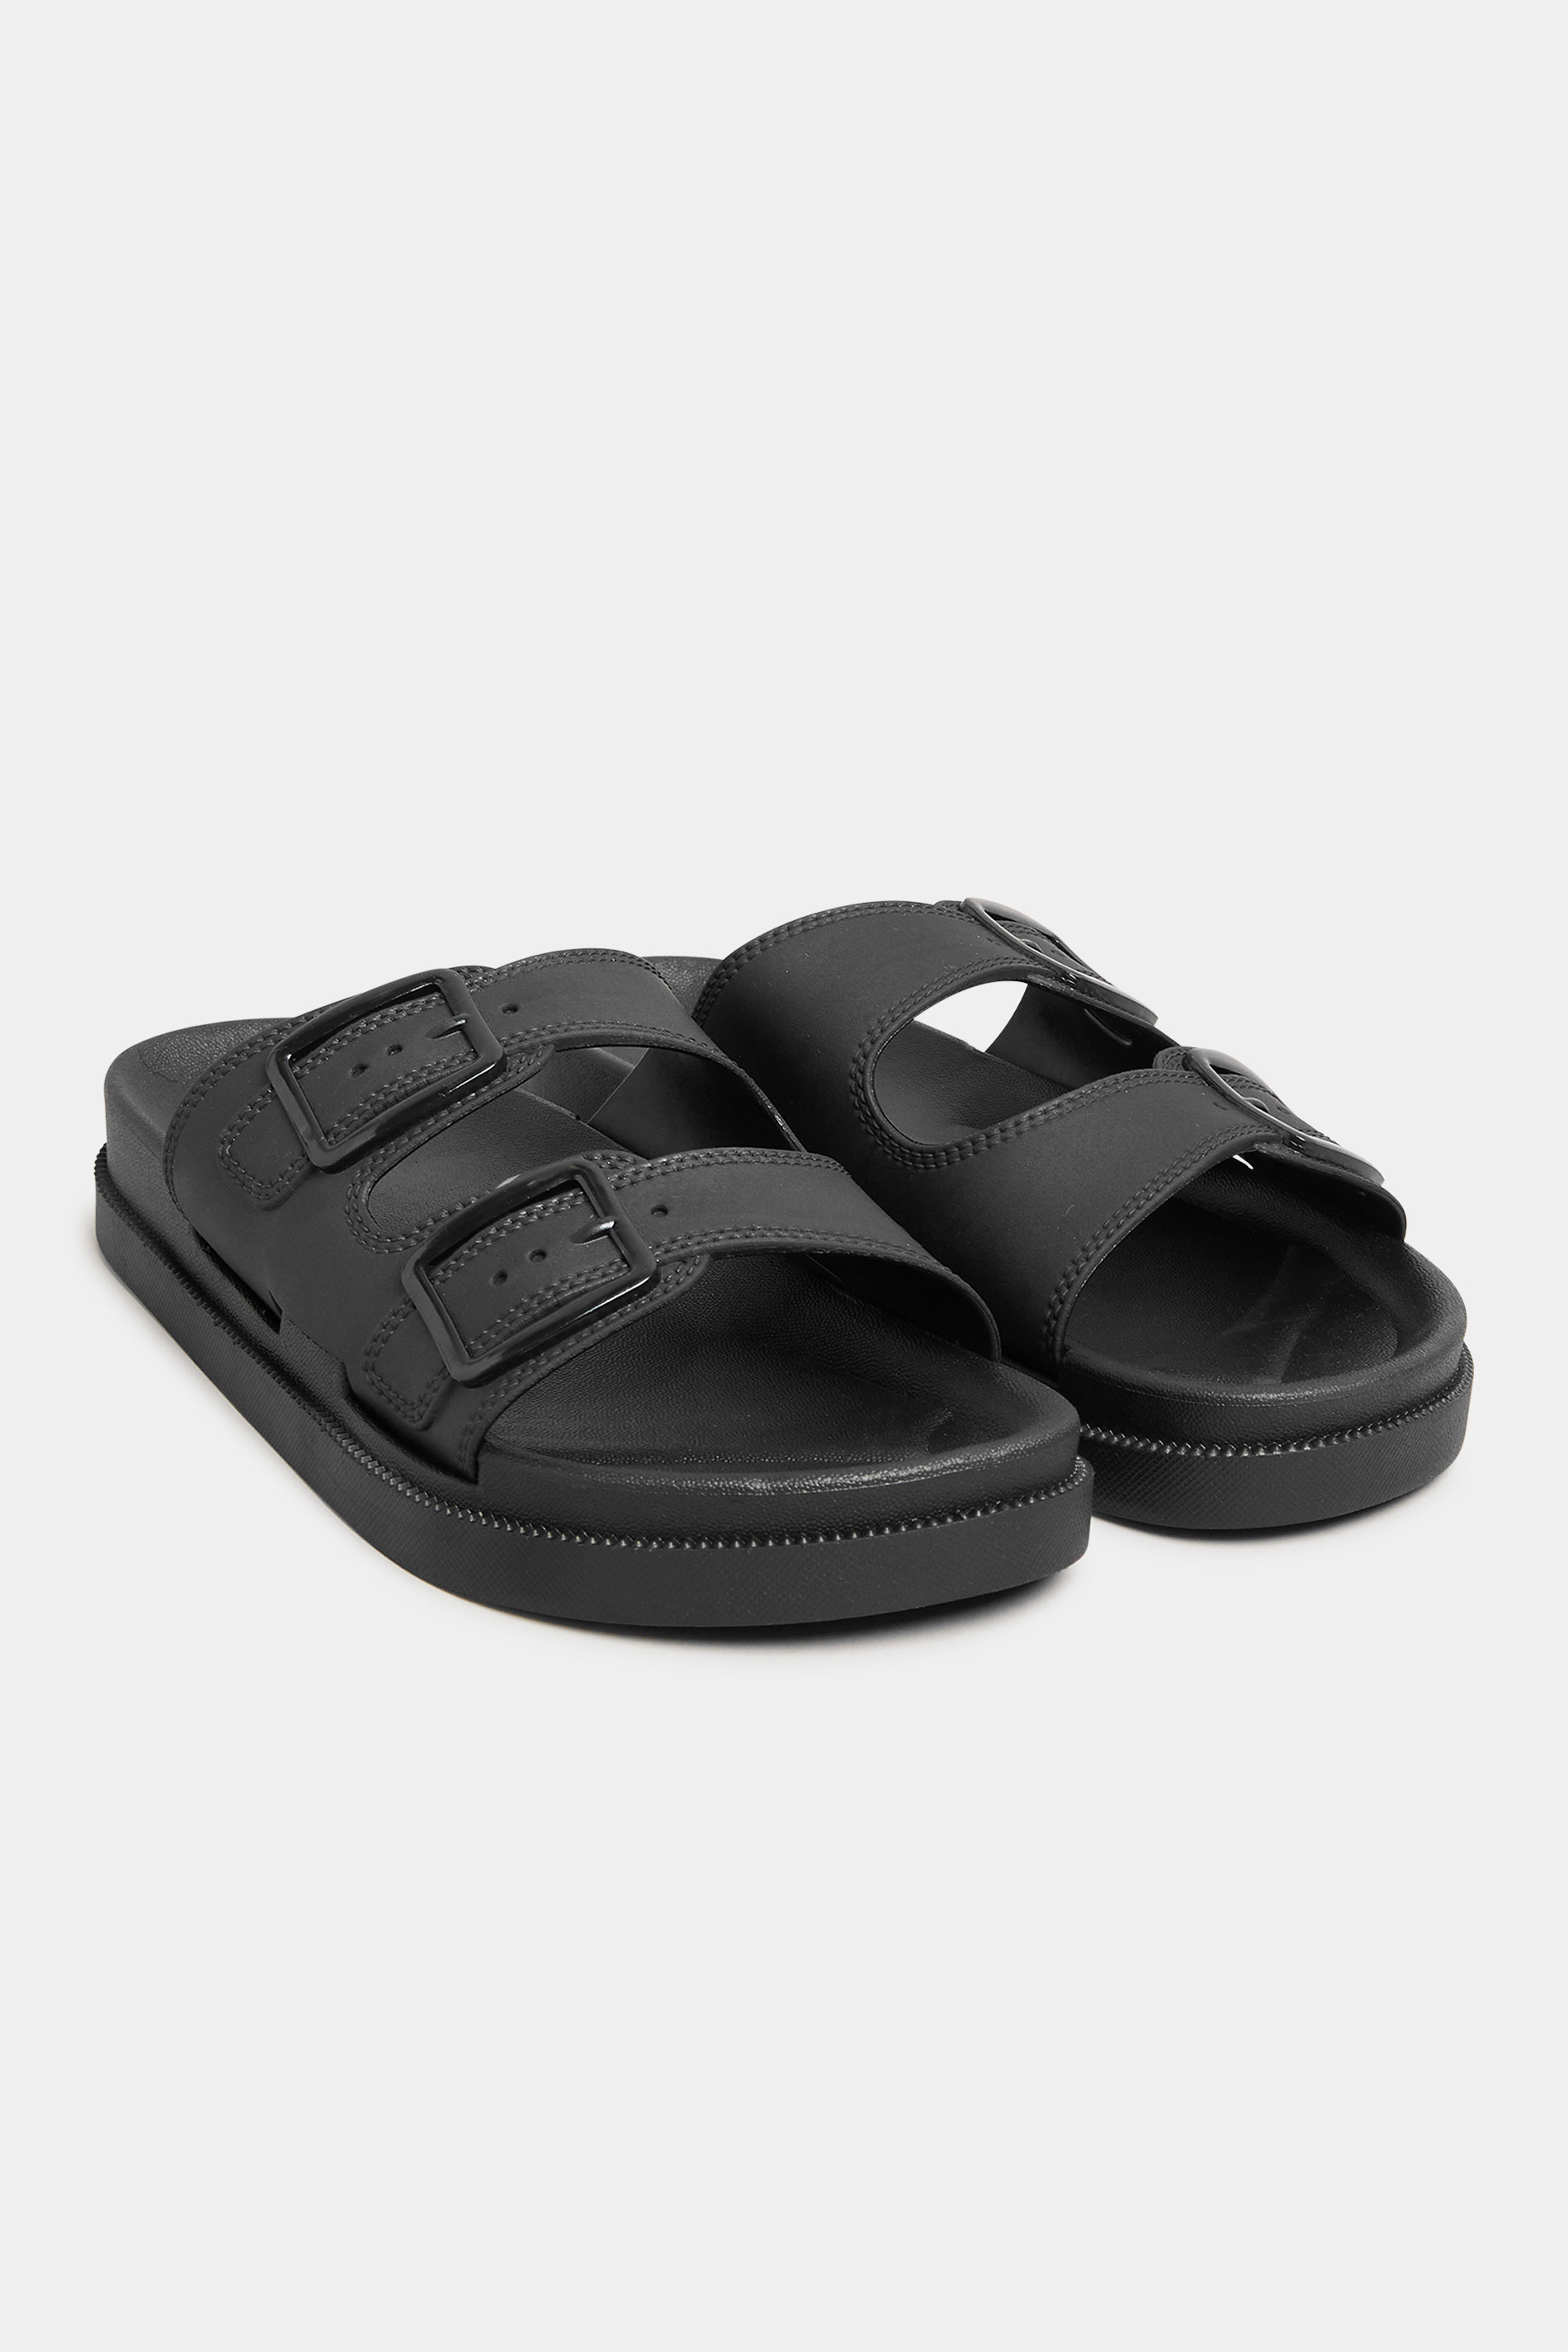 Grande taille  Shoes Grande taille  Flat Shoes | PixieGirl Black Double Buckle Slider Sandals In Standard D Fit - UT13825